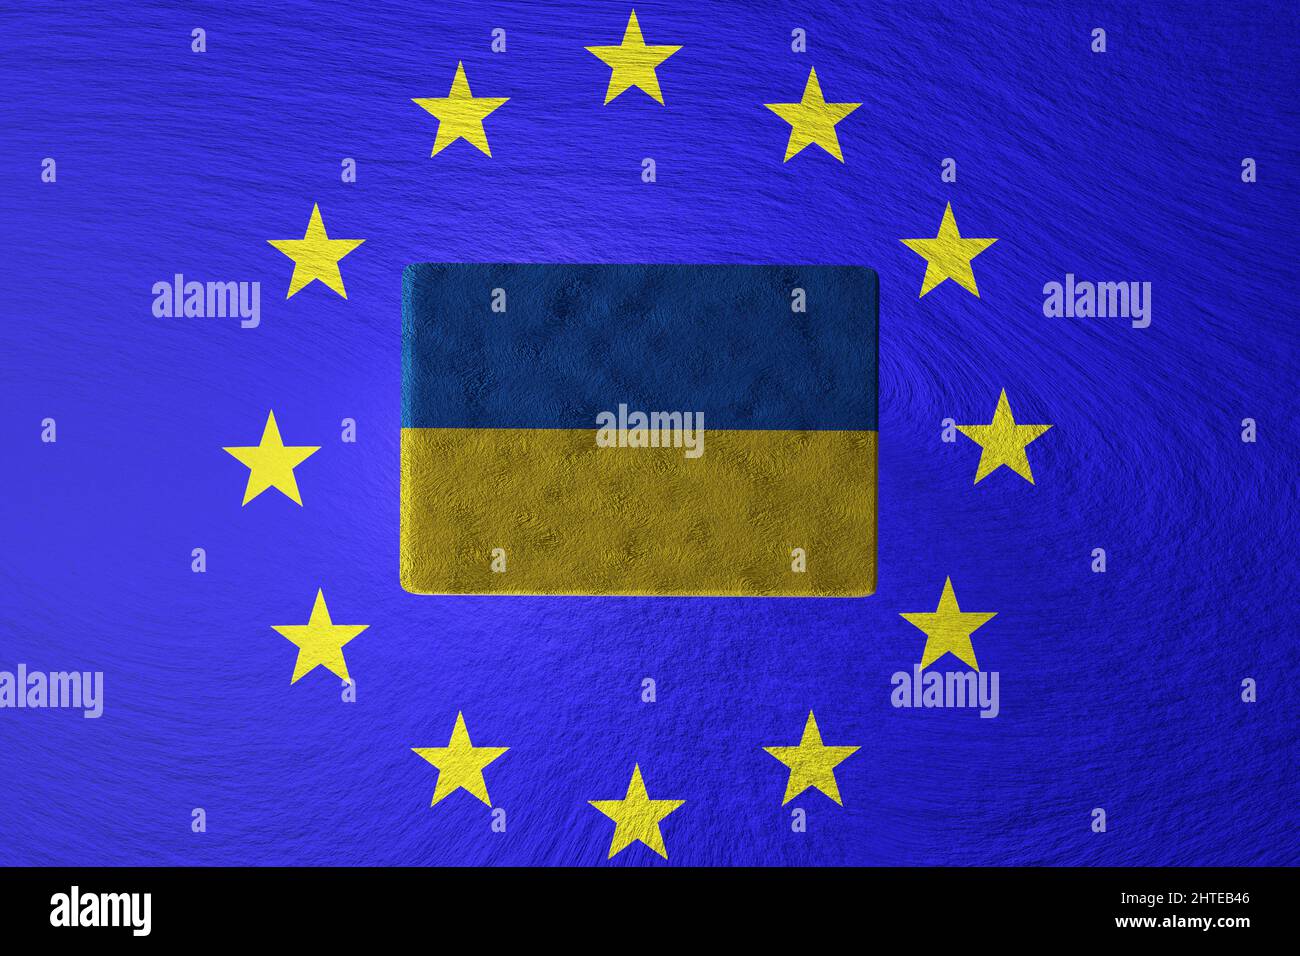 Ukraine joining European Union concept. Ukrainian flag with EU banner. Stock Photo